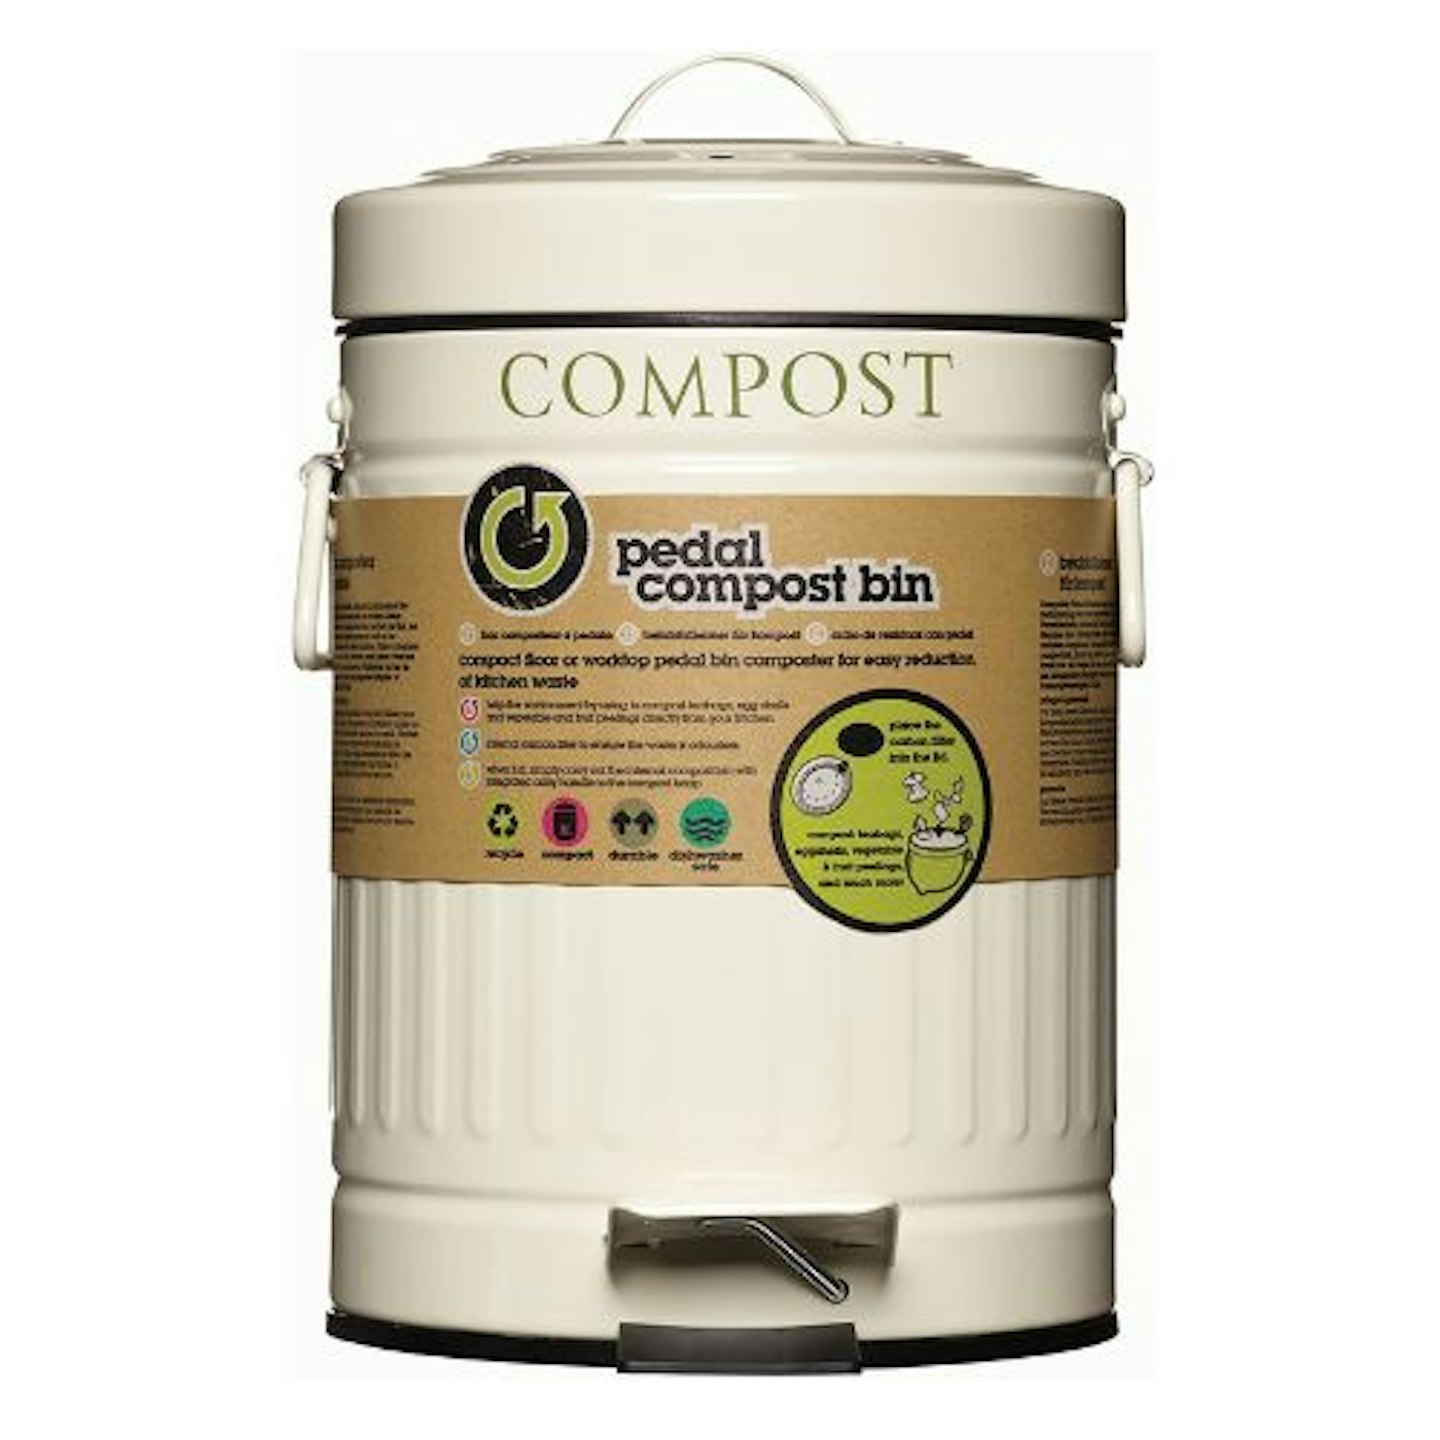 KitchenCraft Kitchen Compost Bin with Pedal